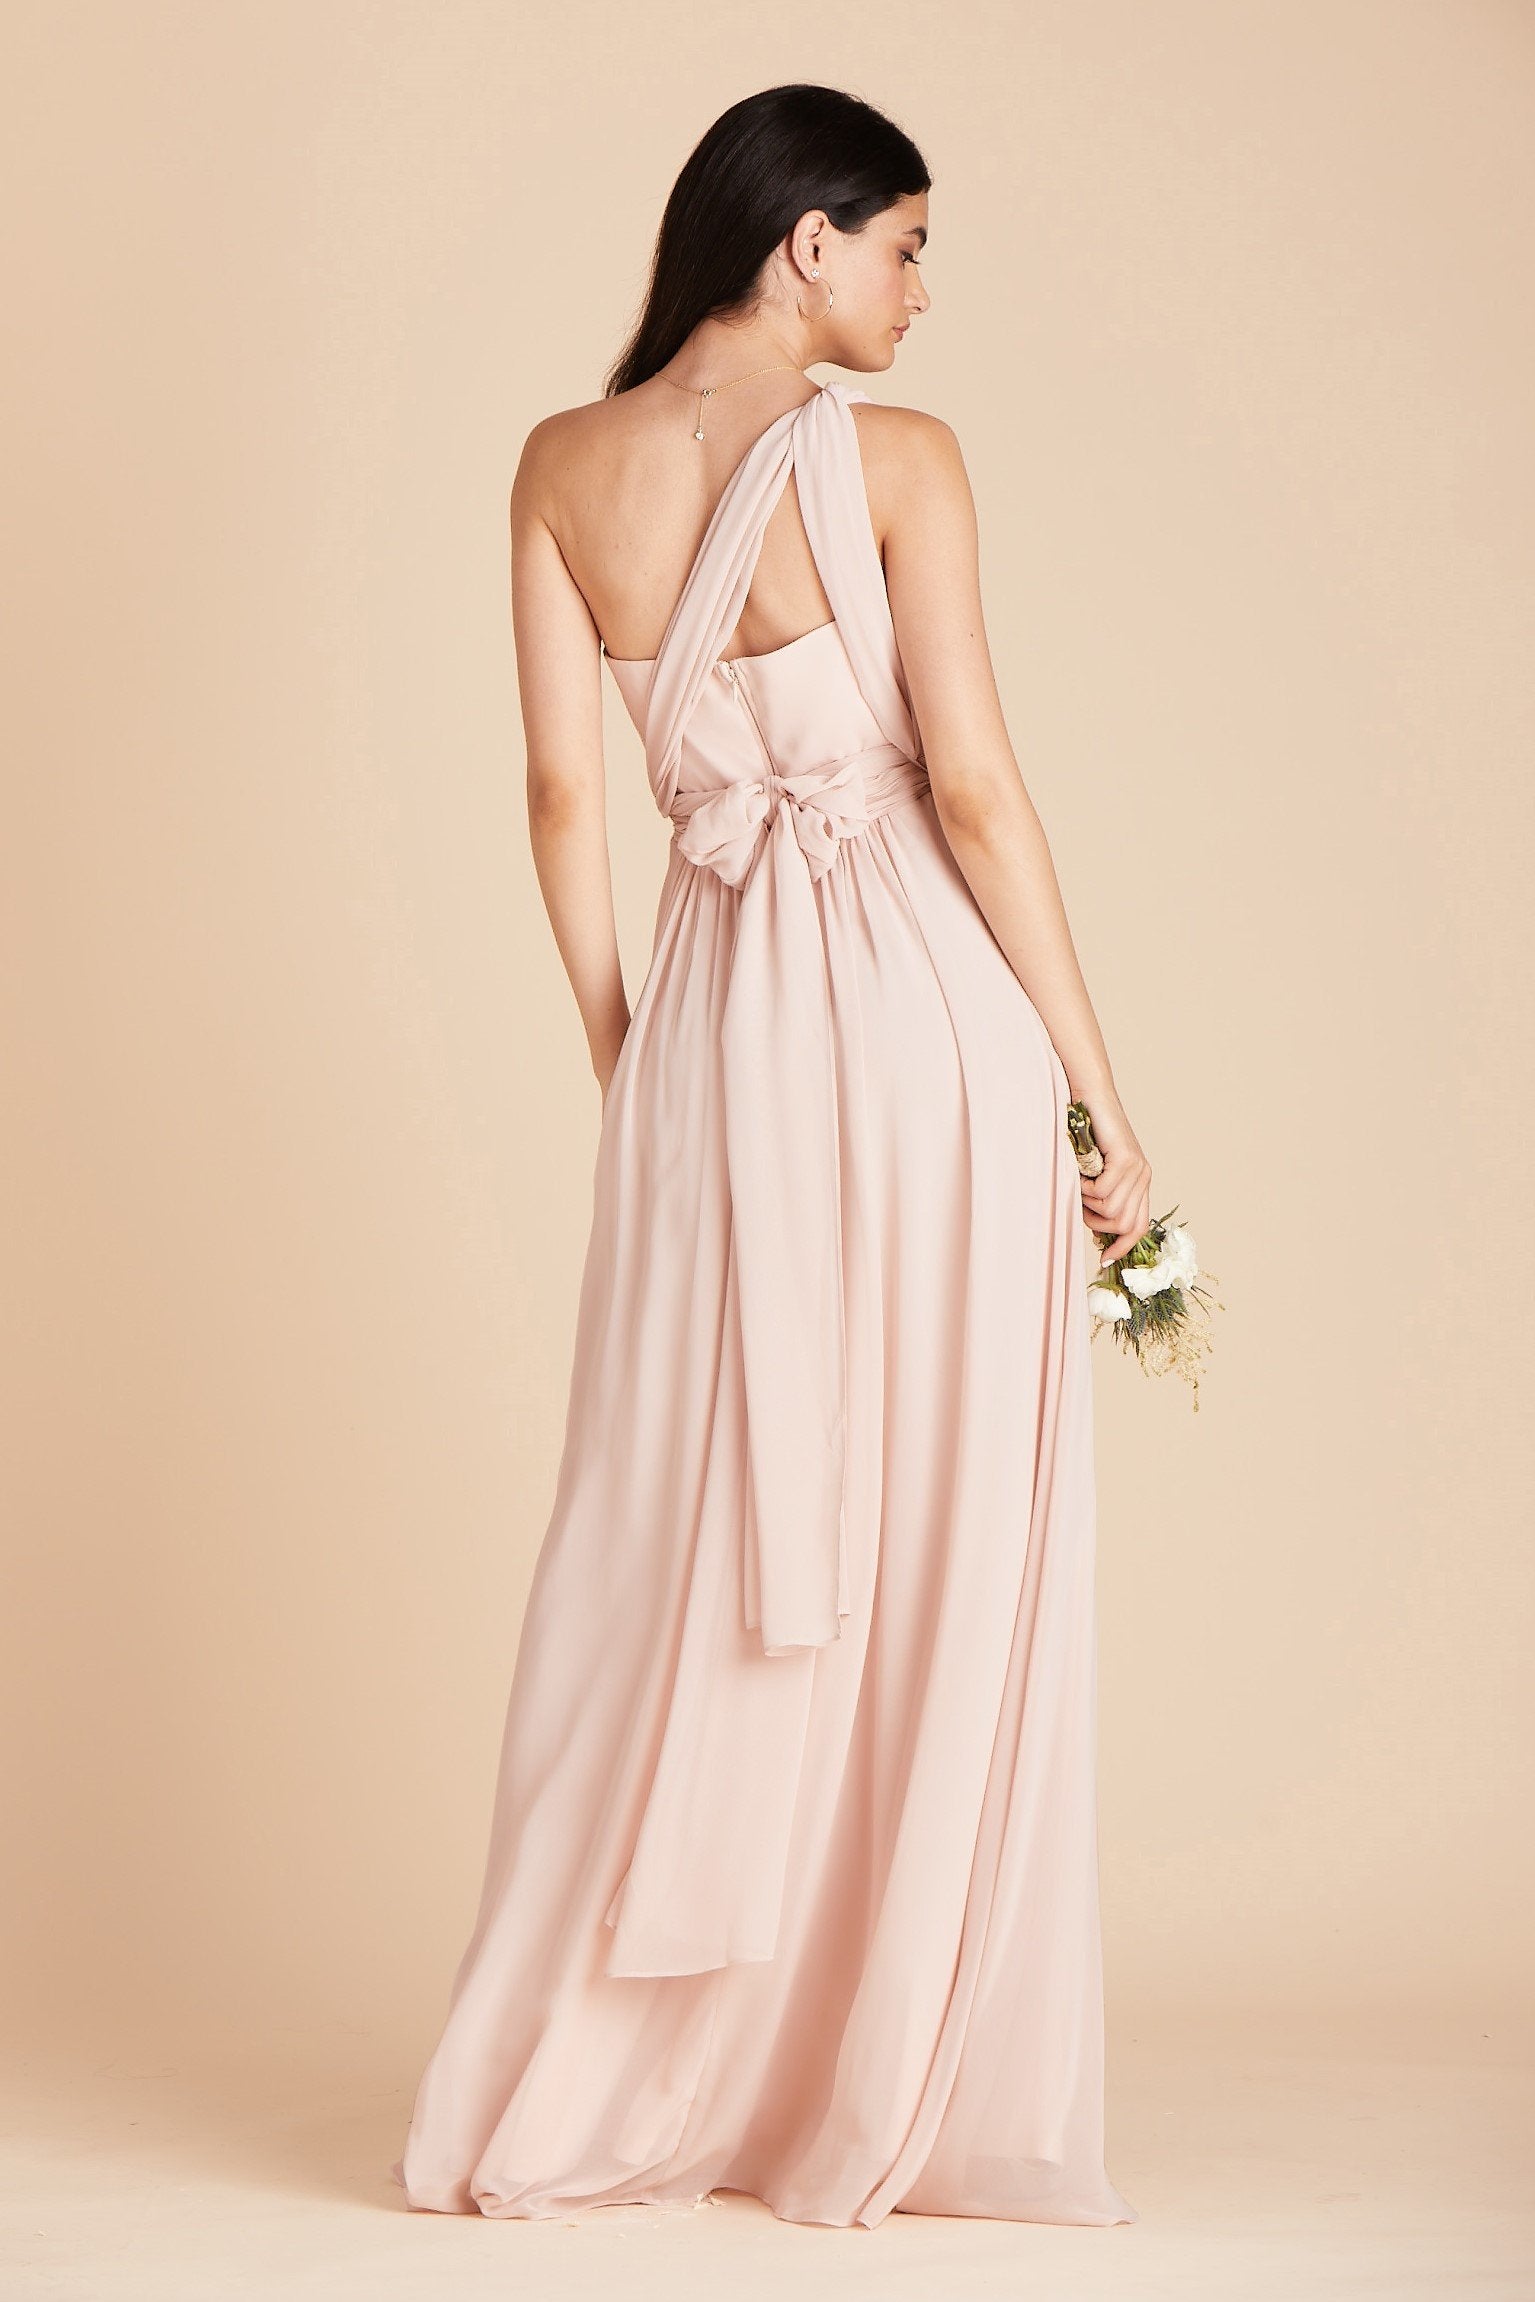 Grace convertible bridesmaid dress in pale blush pink chiffon by Birdy Grey, back view